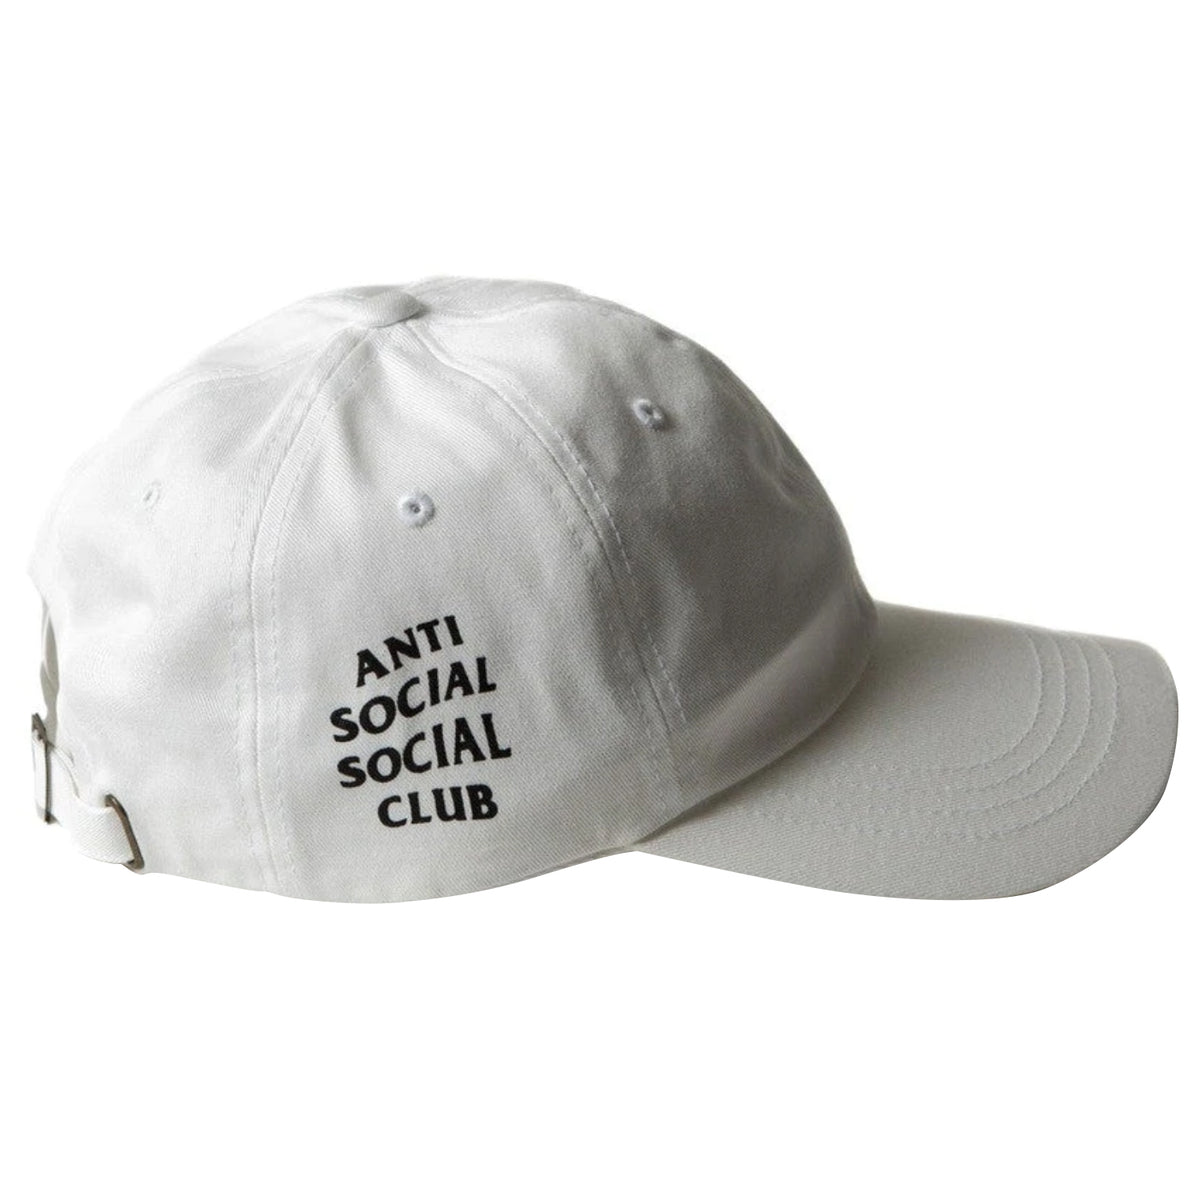 Anti Social Social Club Collapse Bucket Cap Black - NY Tent Sale